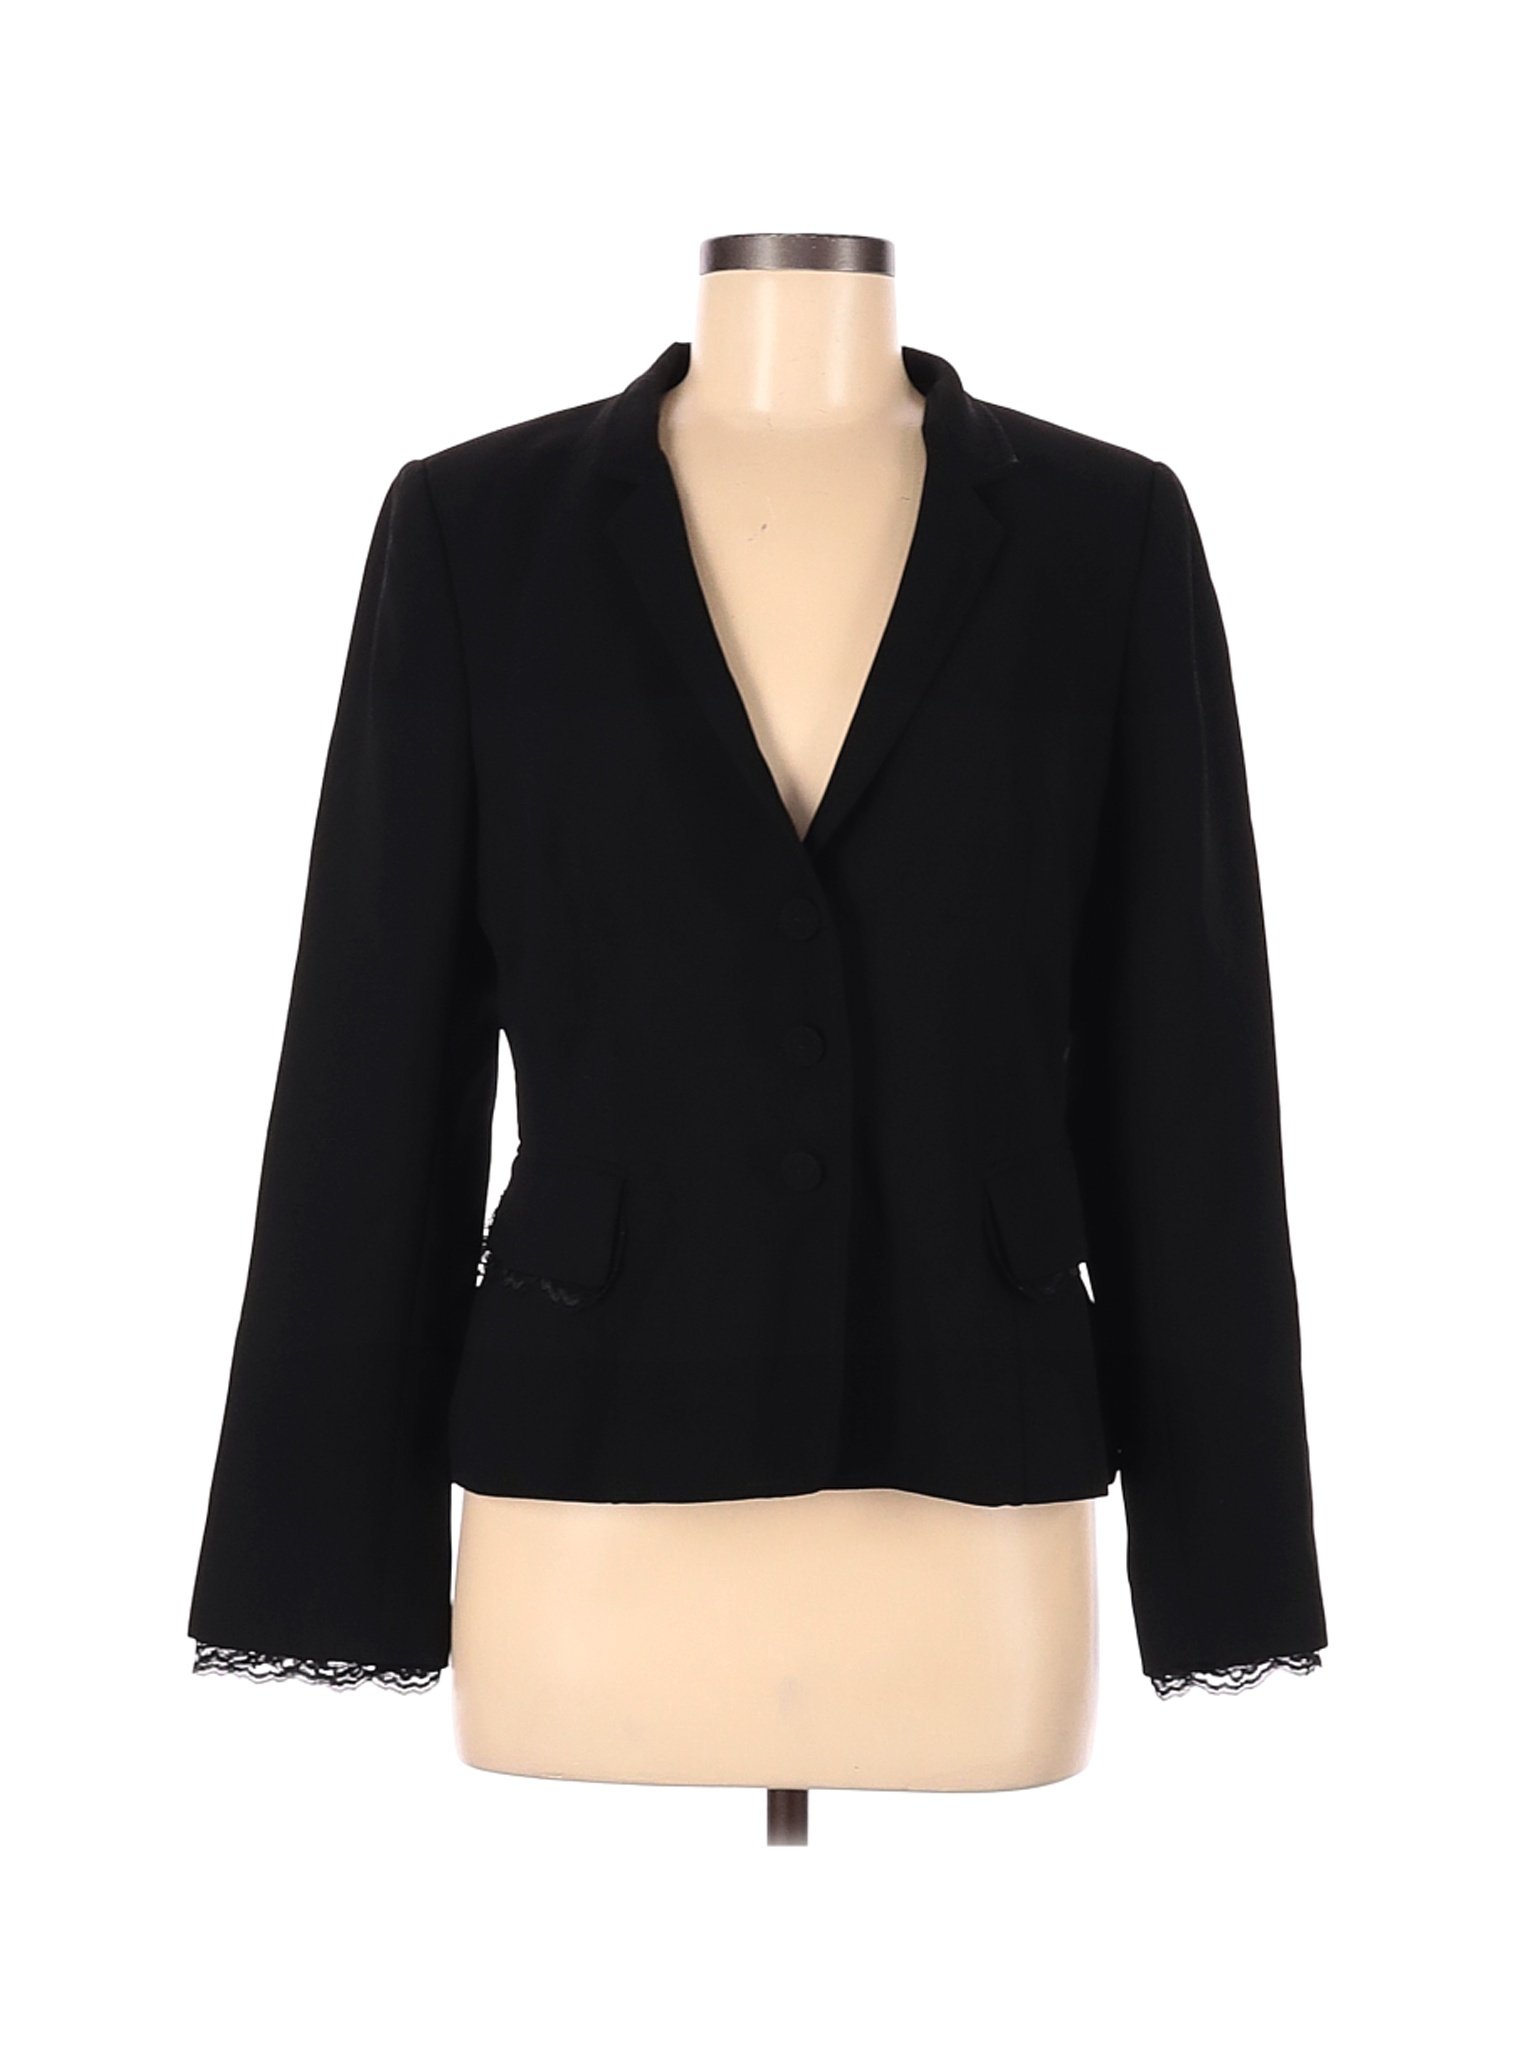 Zara Women Black Blazer 8 | eBay